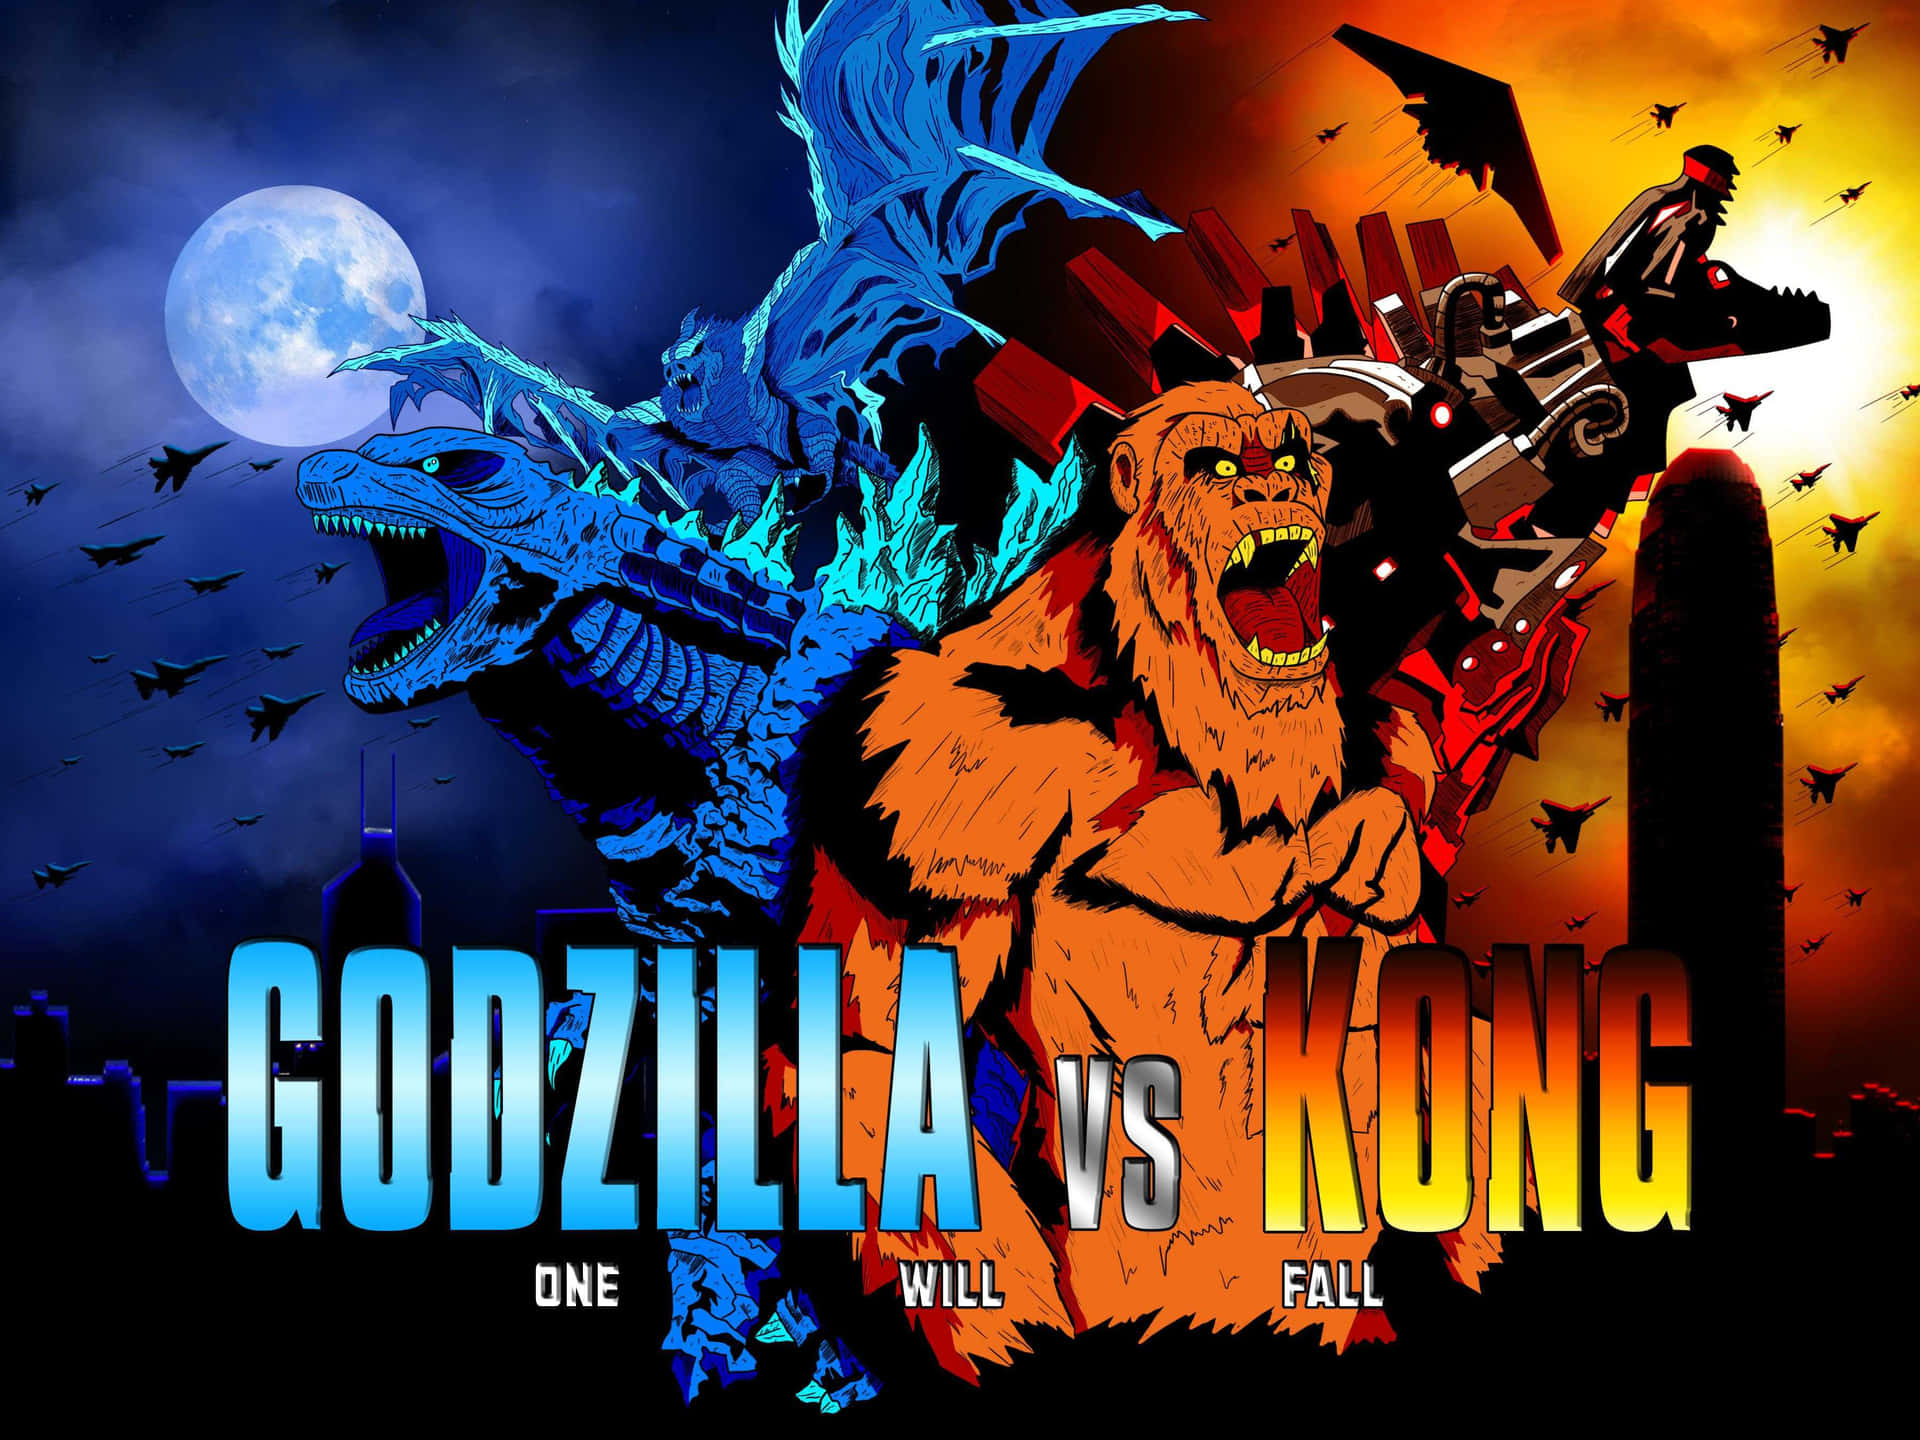 Godzillavs Kong 3600 X 2700 Bakgrund.